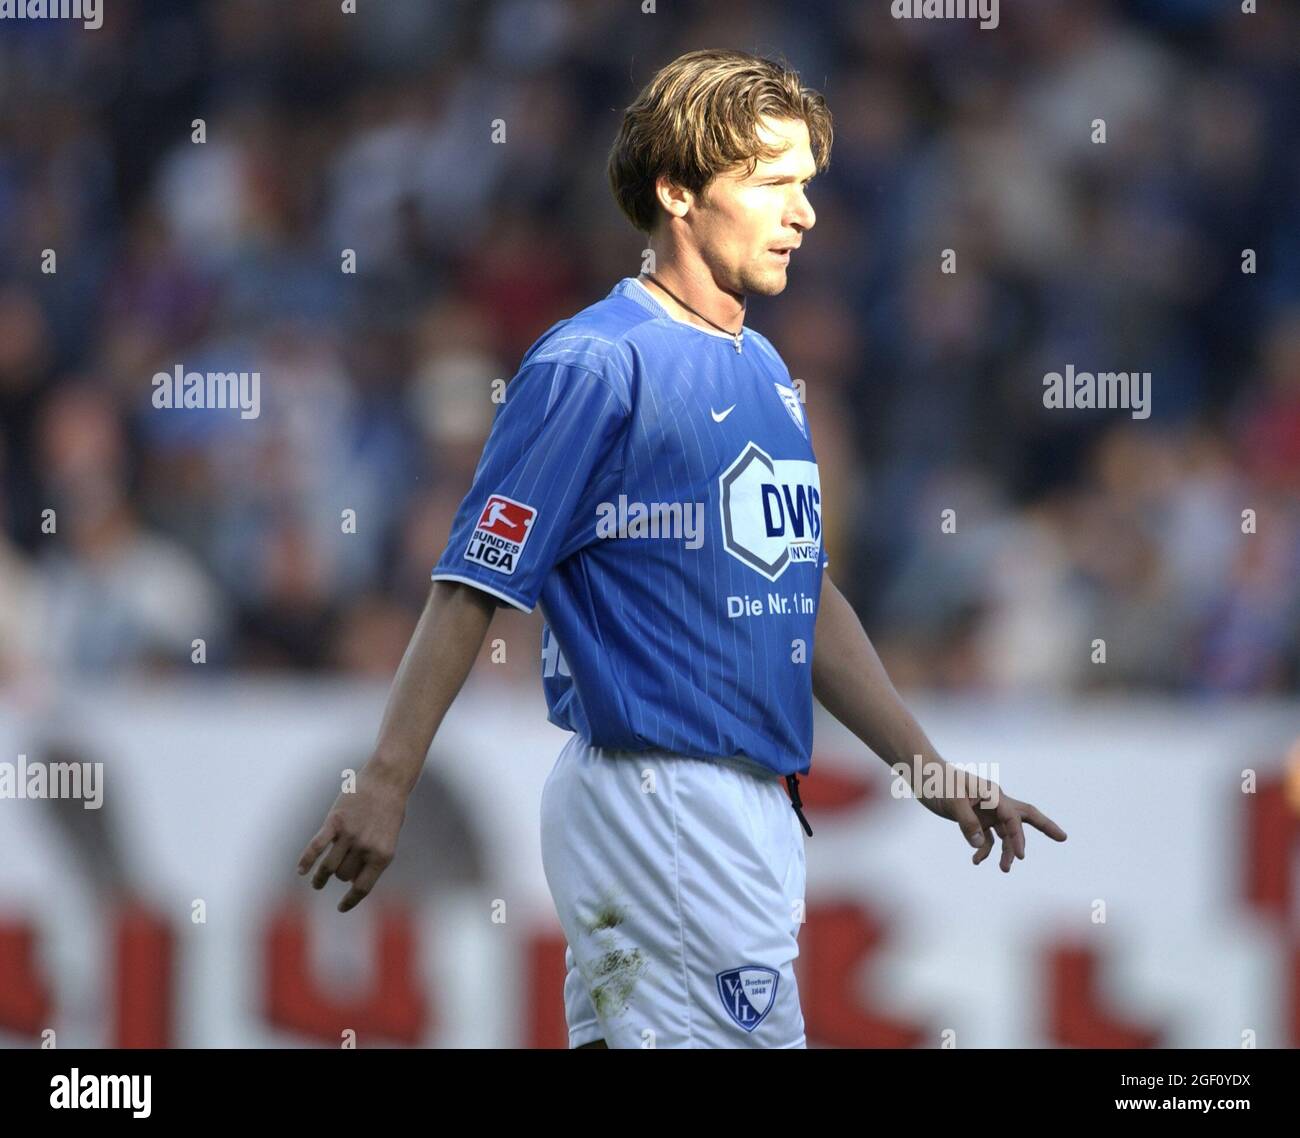 Bochum Germany 15.9.2002, Football: Bundesliga season 2002/03, VfL Bochum (VFL, blue) vs Hansa Rostock (HRO, red) 0:1 —  Darius Wosz (VFL Stock Photo